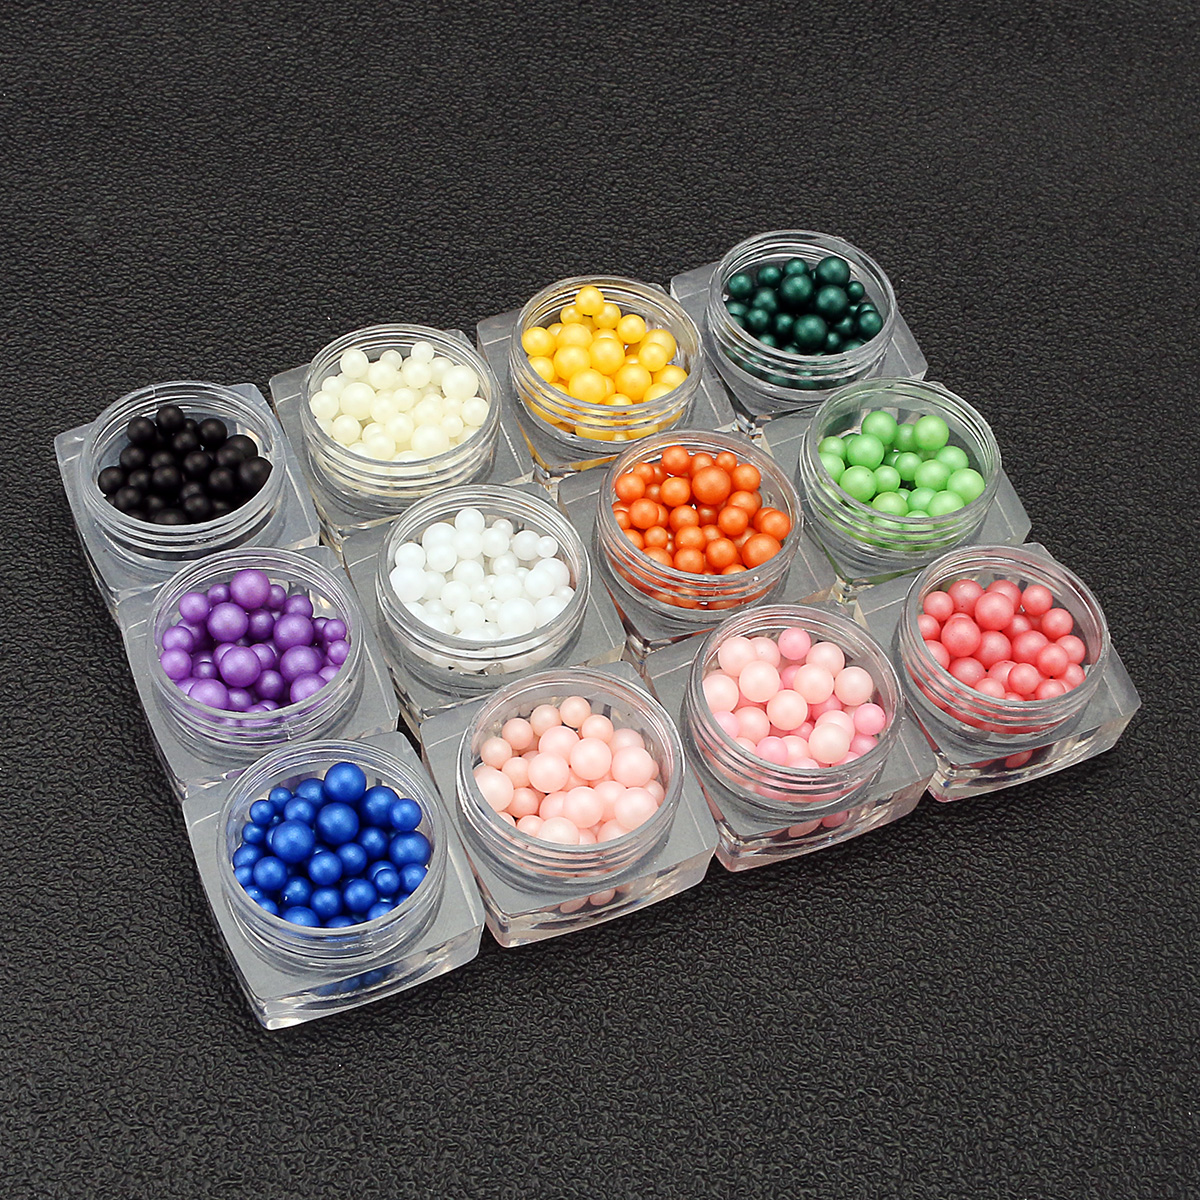 12-Colors-Ball-Caviar-Nail-Art-Beads-Gel-Polish-Manicure-Pedicure-DIY-3D-Tips-Decoration-Tool-1136885